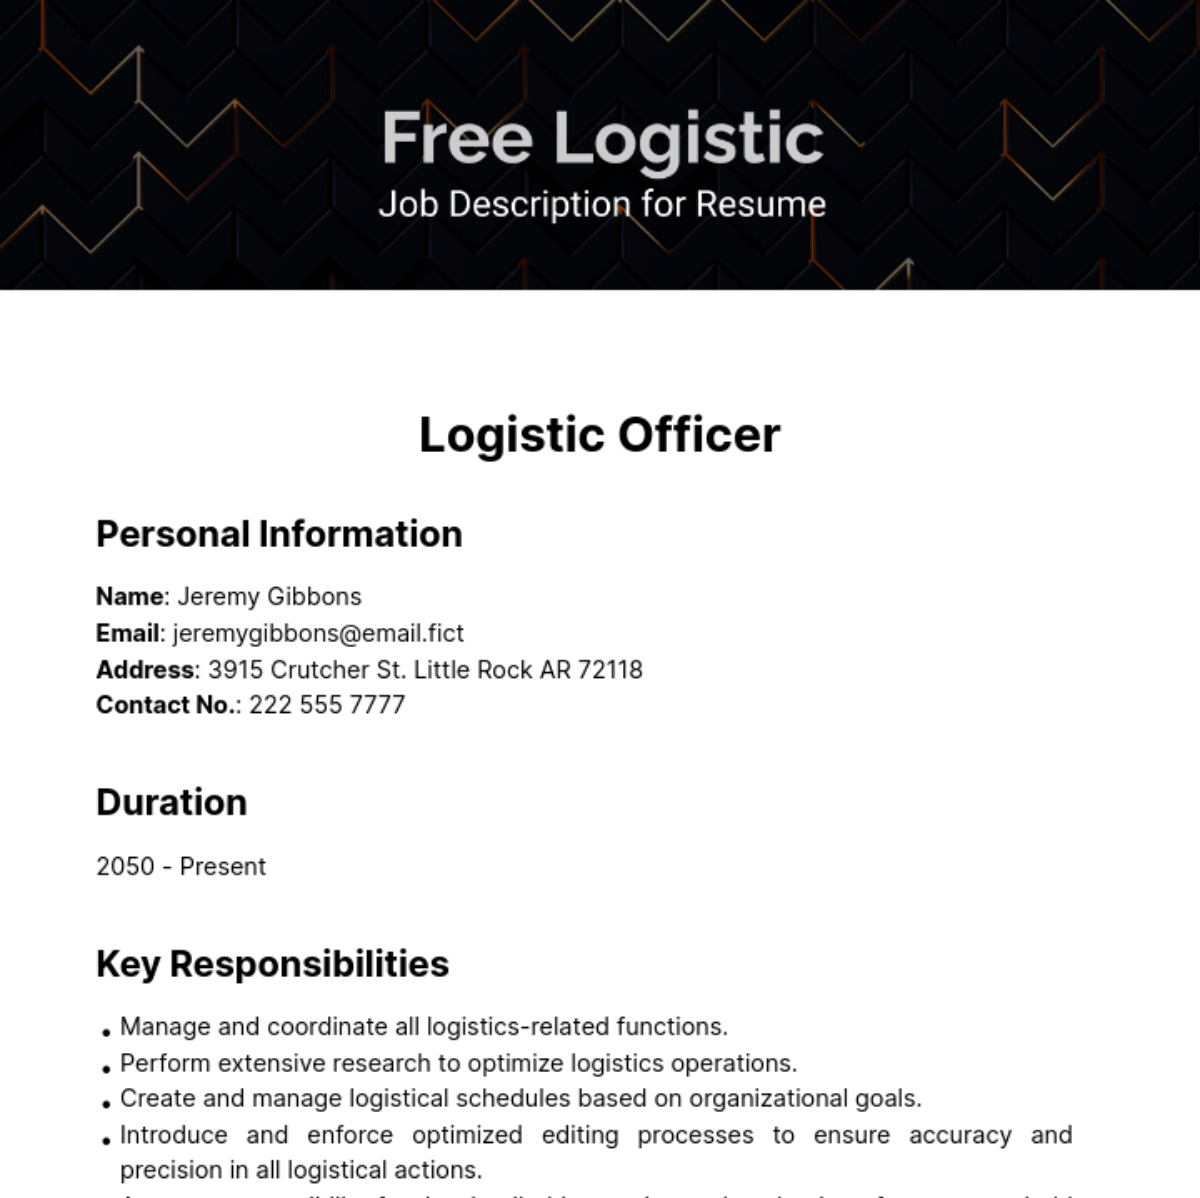 Logistics Job Description For Resume Template